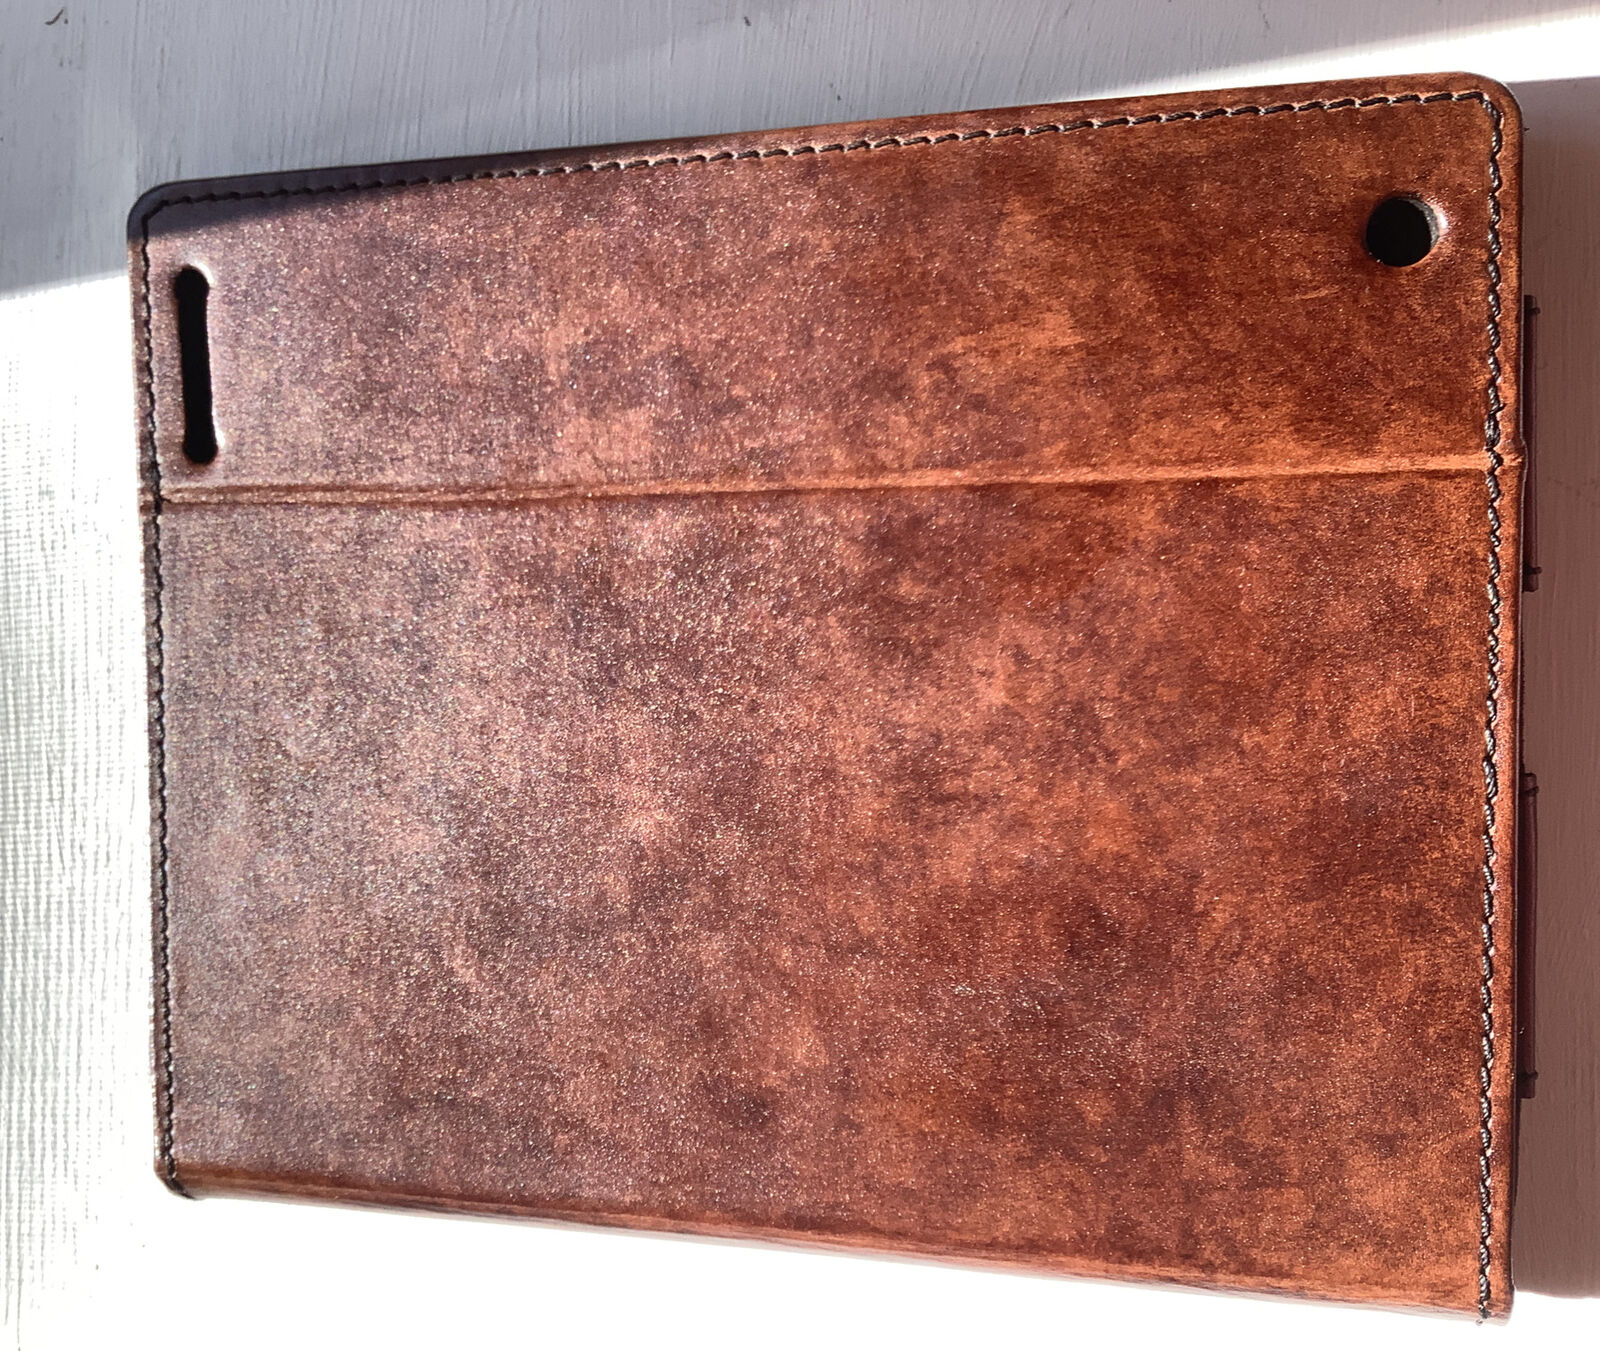 Pottery Barn Saddle Leather Tablet iPad Case Holder